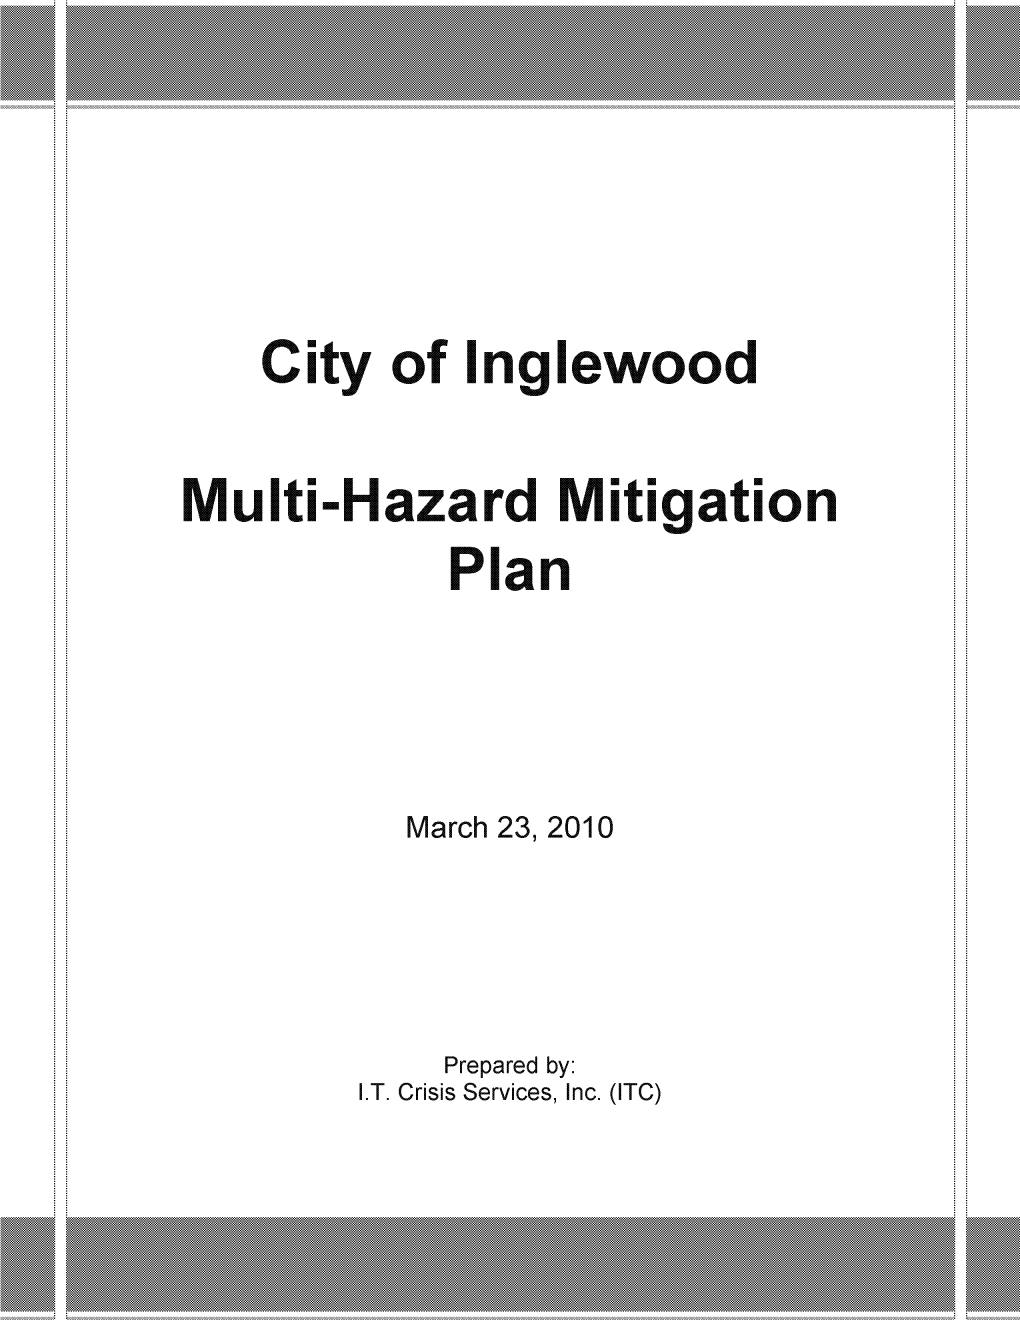 City of Inglewood Multi-Hazard Mitigation Plan